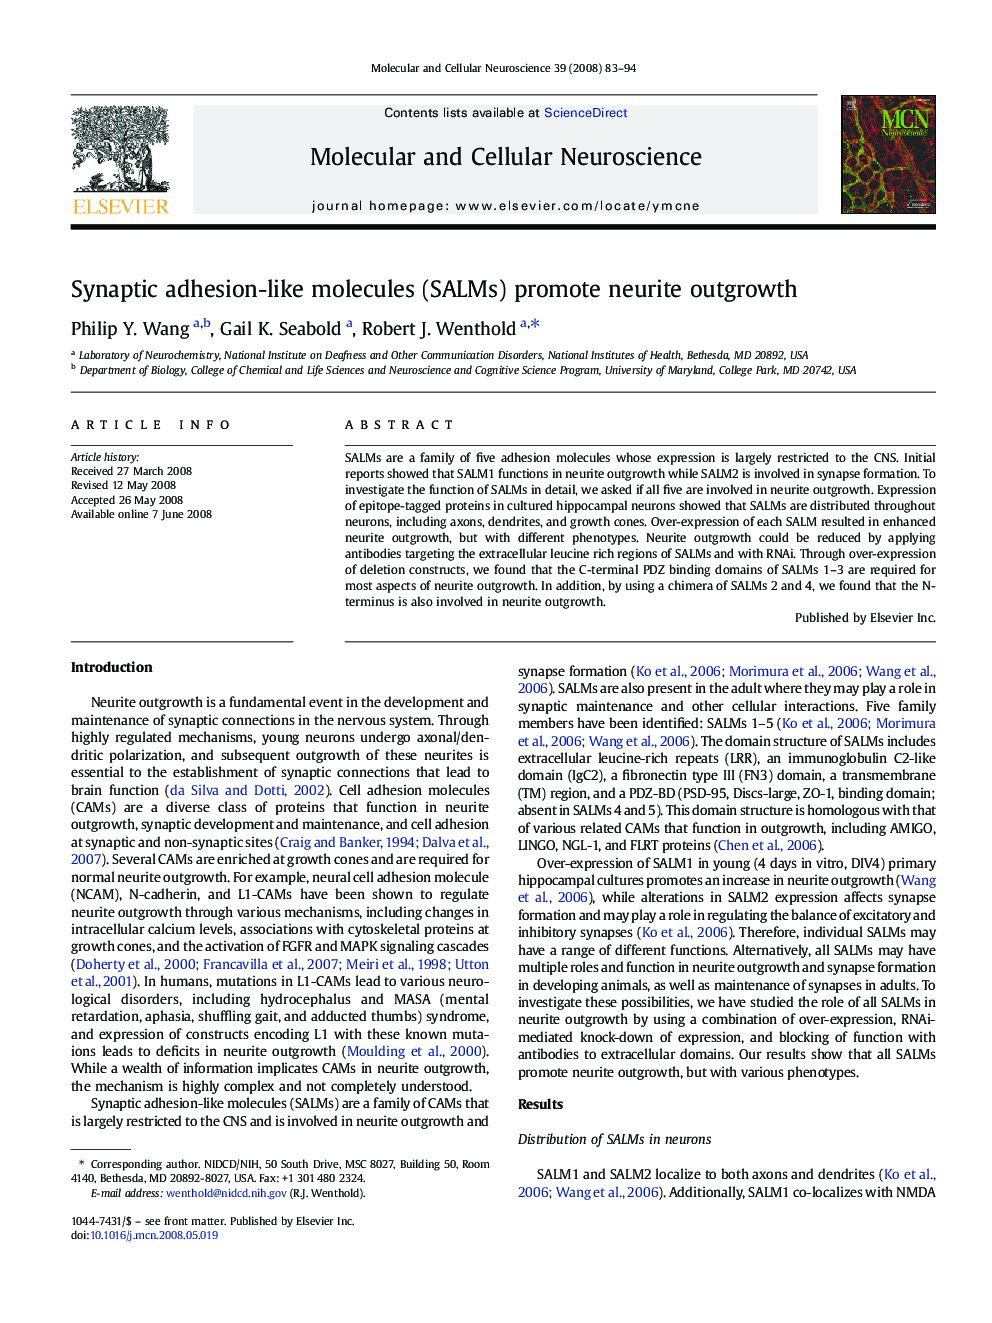 Synaptic adhesion-like molecules (SALMs) promote neurite outgrowth